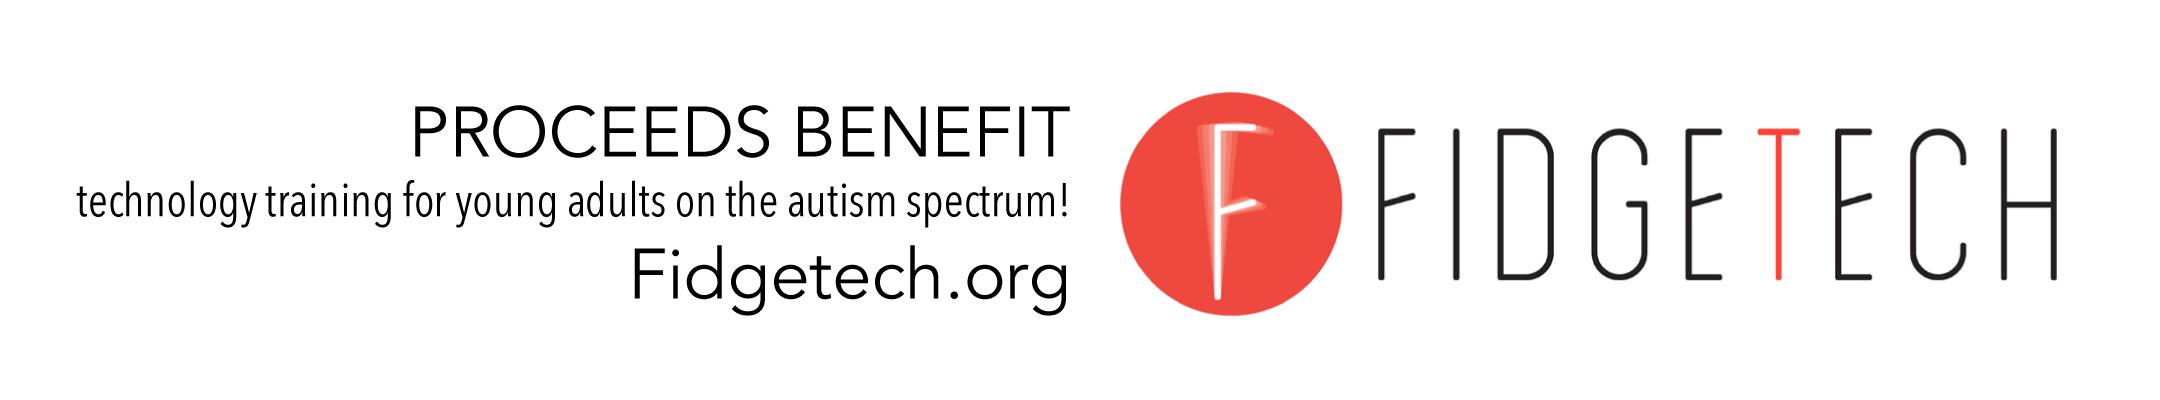 proceeds benefit FIDGETECH